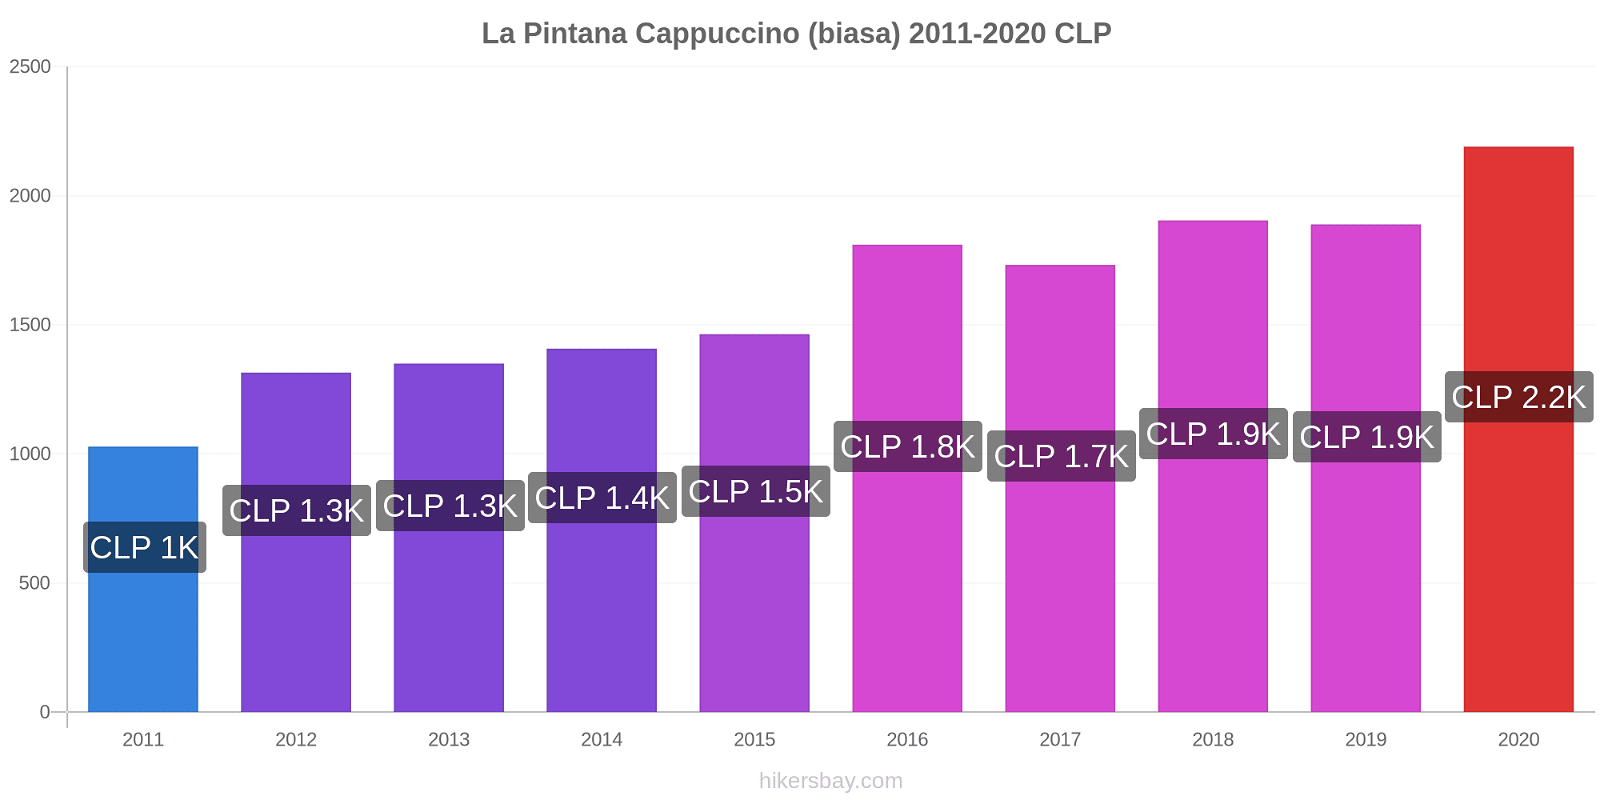 La Pintana perubahan harga Cappuccino (biasa) hikersbay.com